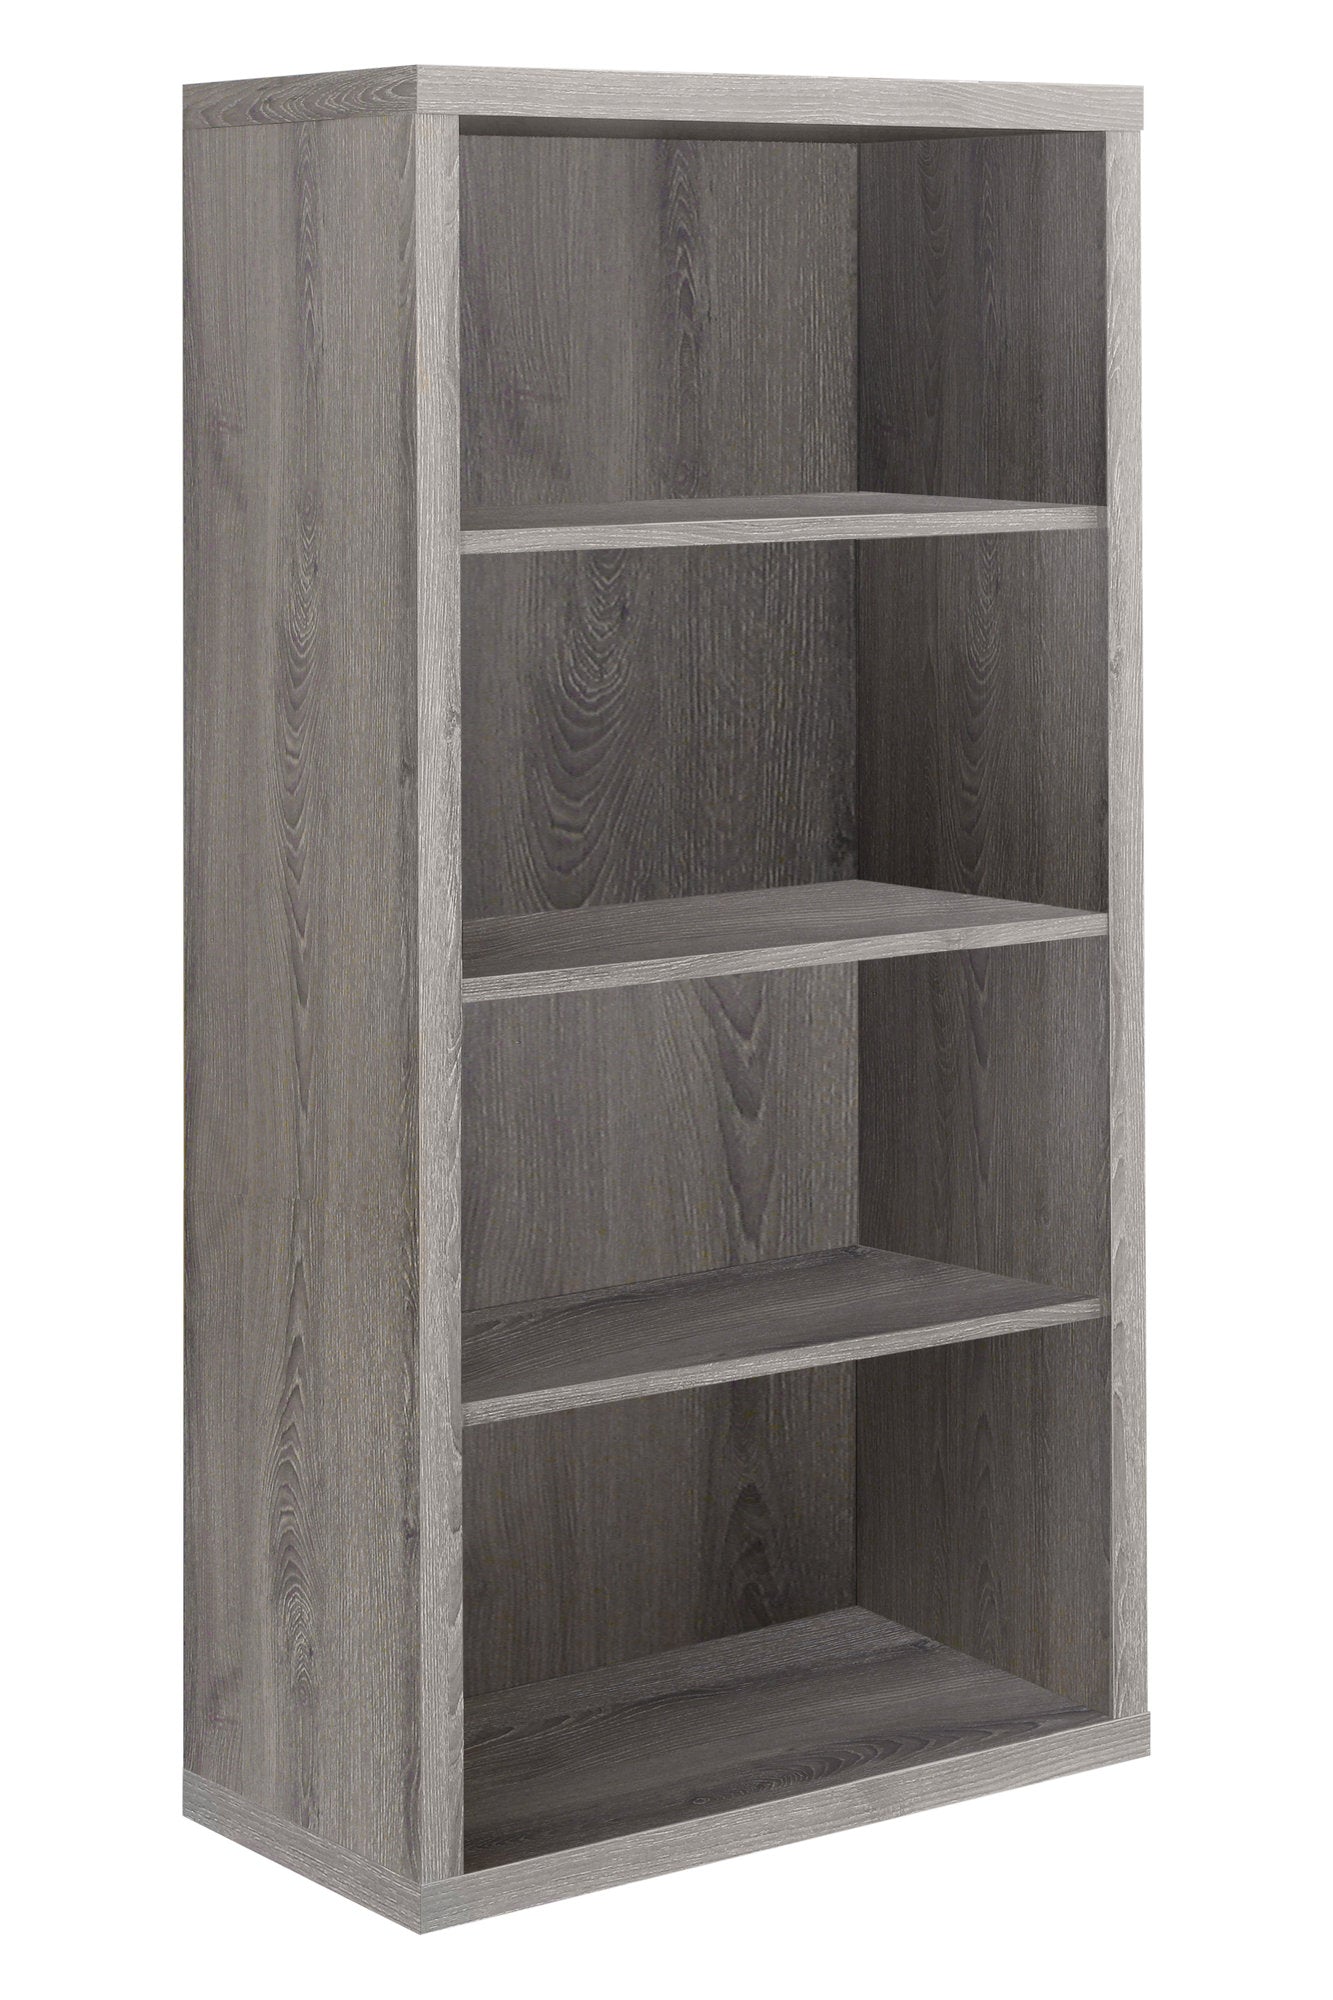 Modern 48"H 4 Shelf Etagere Bookcase in Dark Taupe Finish